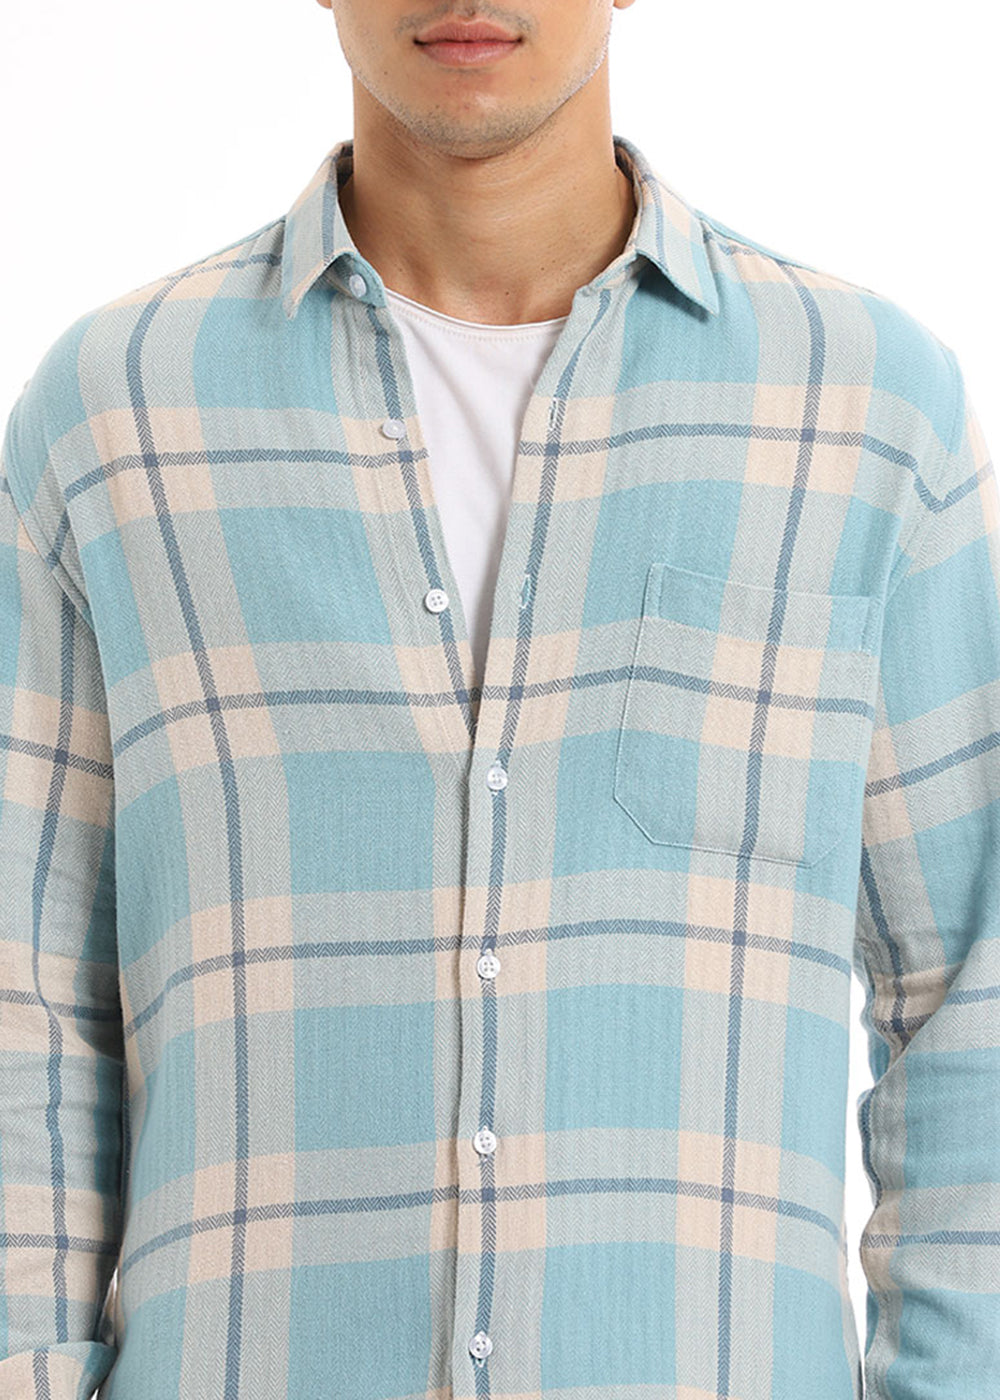 Dobby Turquoise Check Shirt